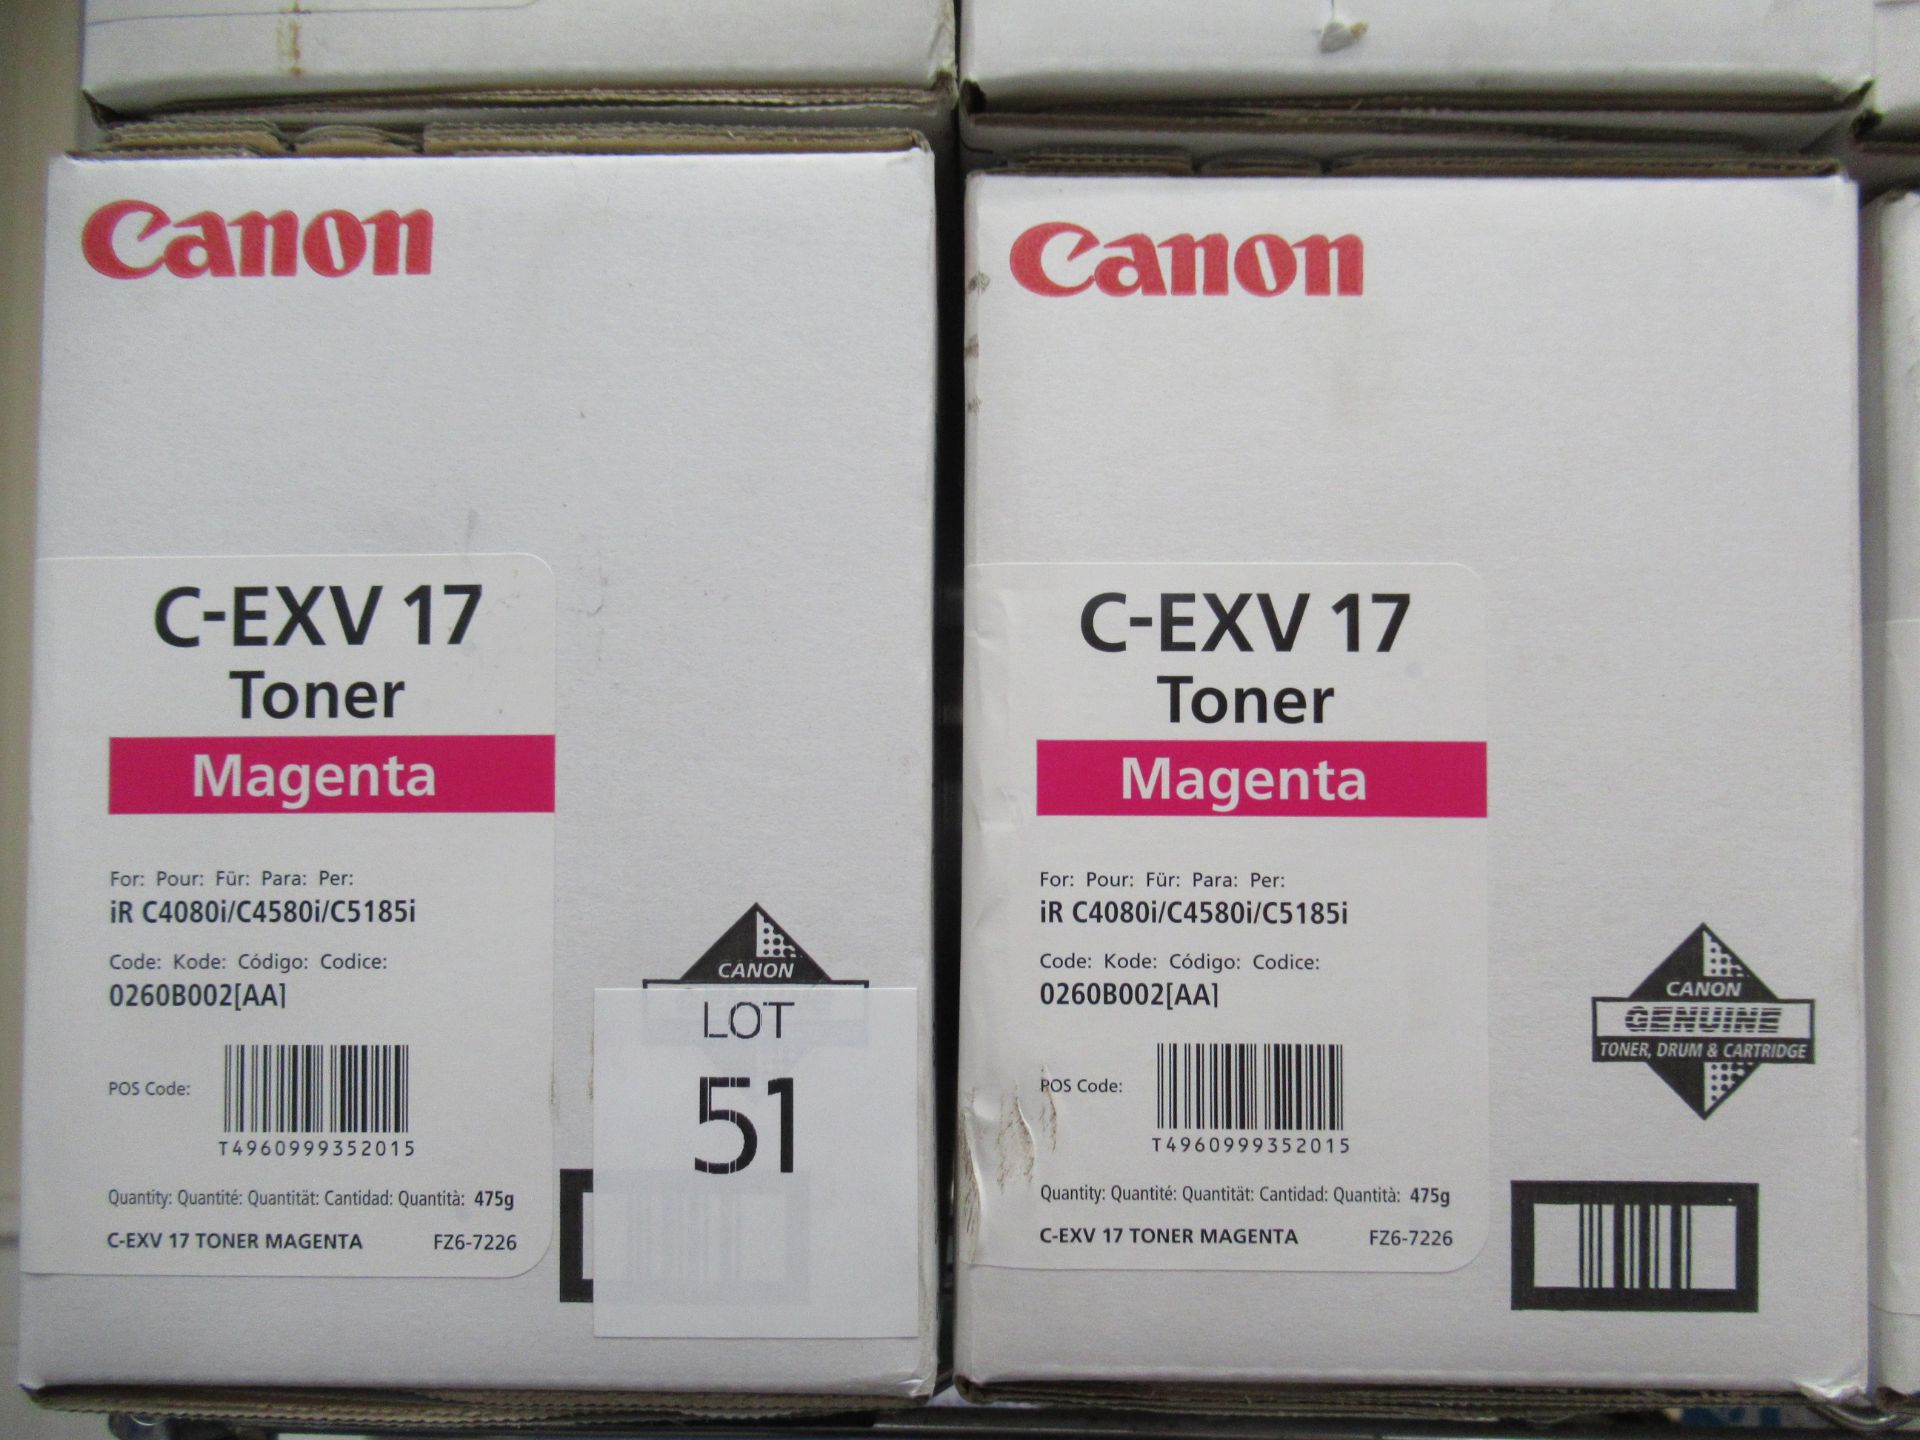 6x Canon C-EXV17 Toner Cartridges - Image 2 of 3